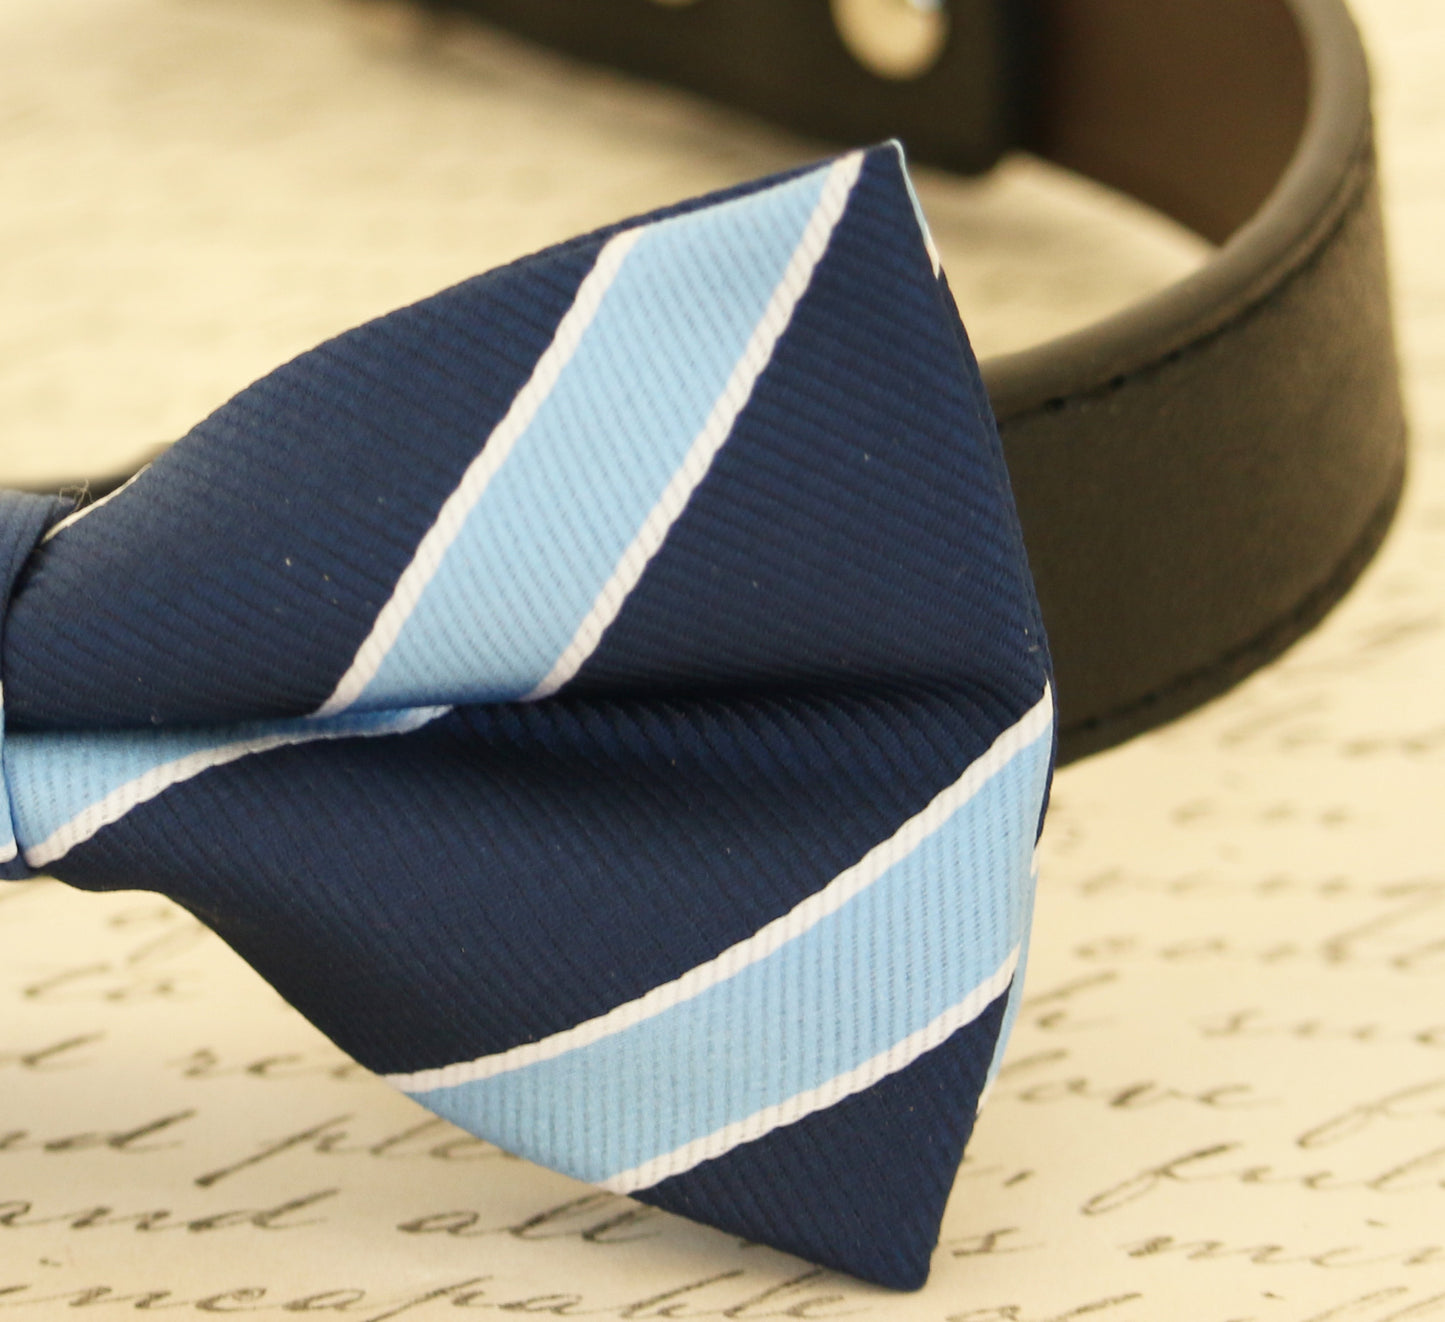 Navy dog bow tie dog collar, Something blue, Pet wedding accessory , Wedding dog collar